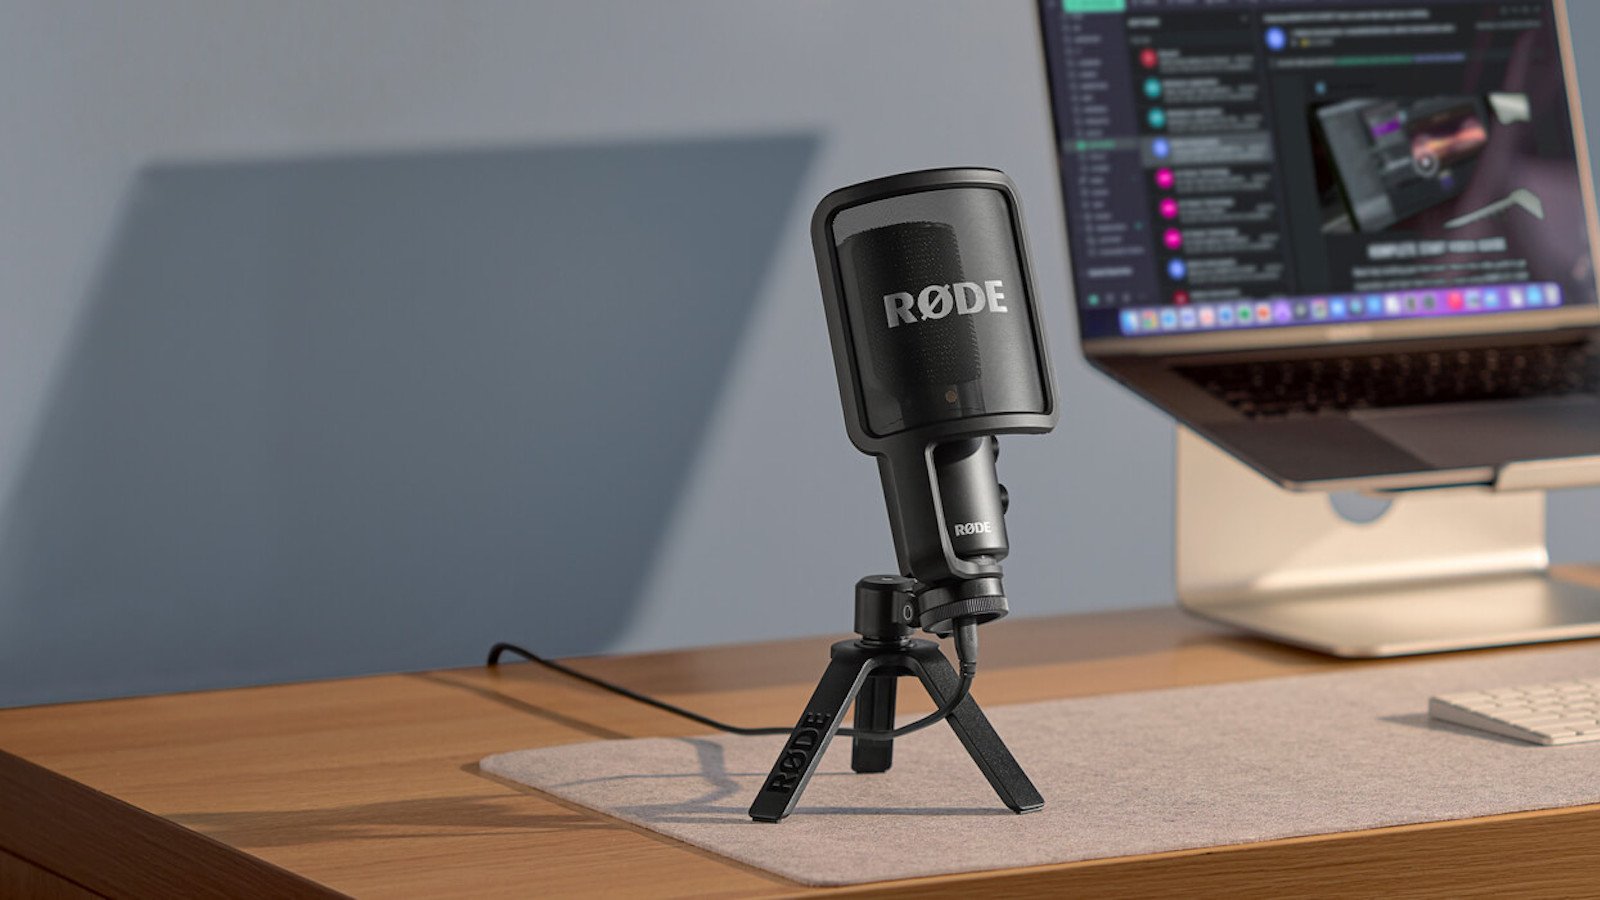 RØDE NT-USB+ professional USB microphone makes capturing studio-quality sound super simple